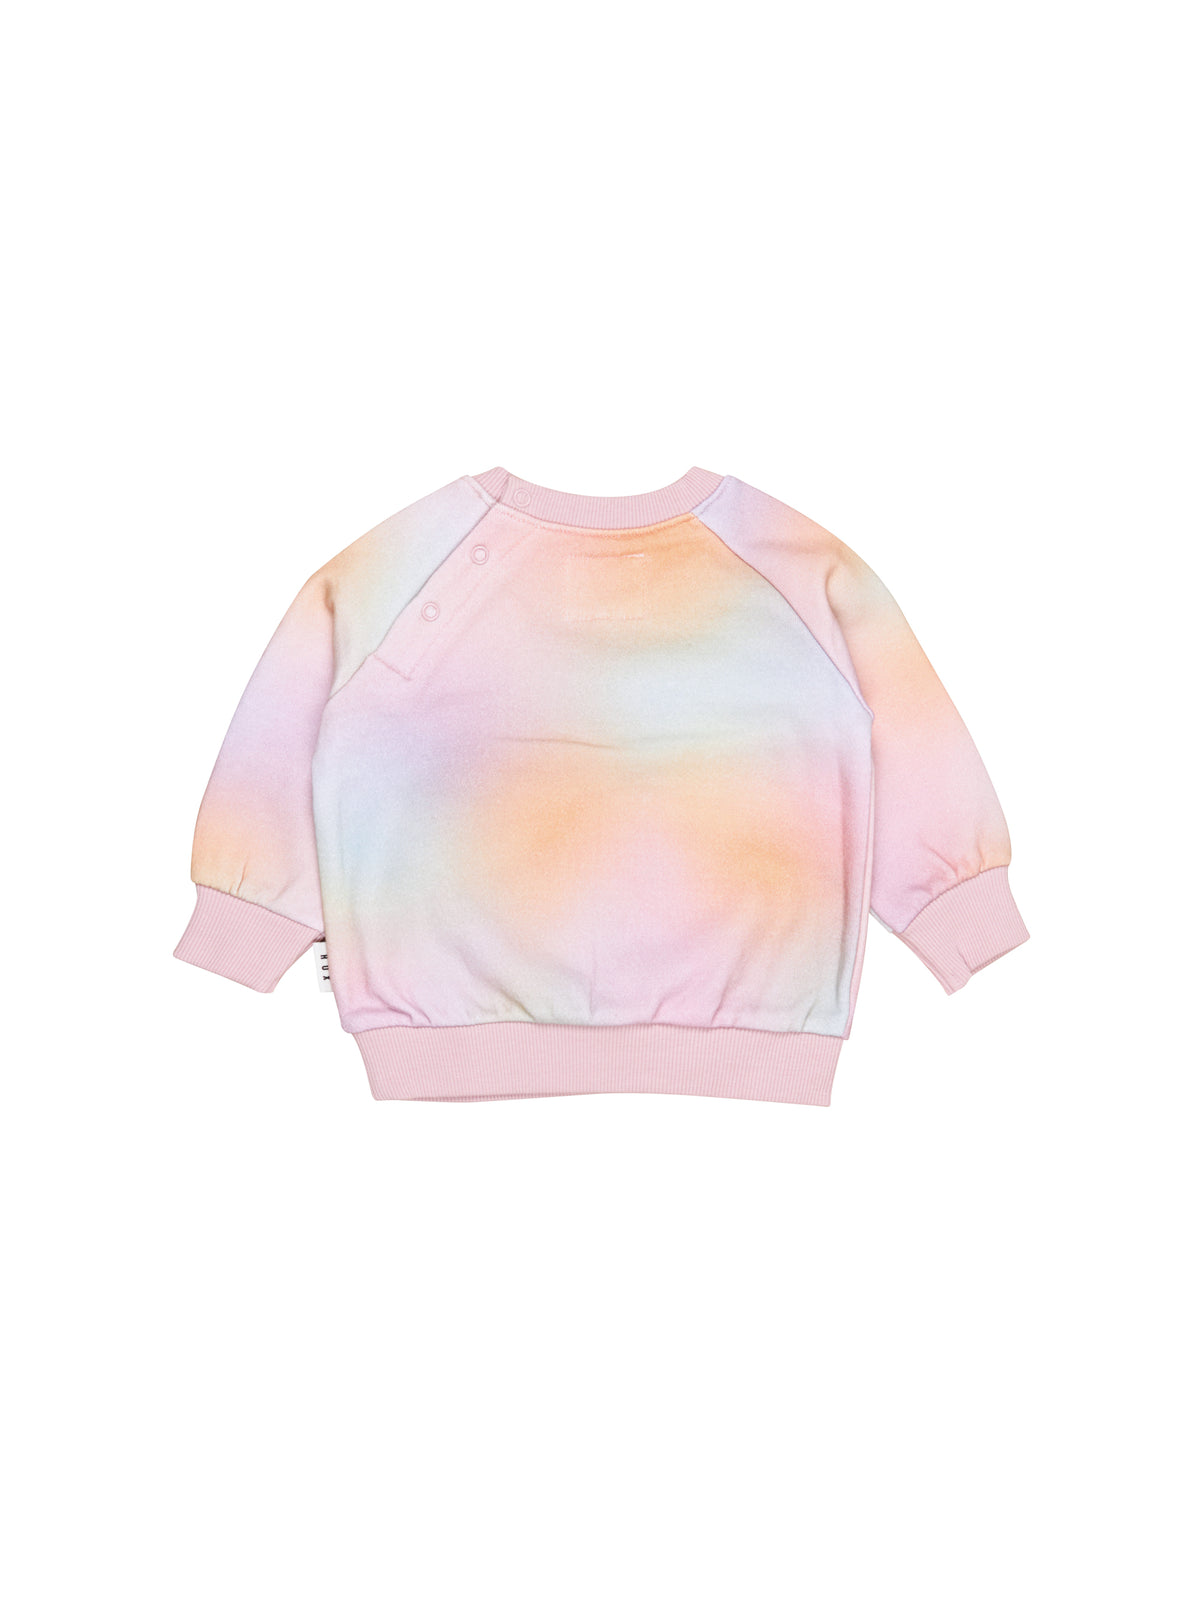 Rainbow Swirl Glittercorn Sweatshirt